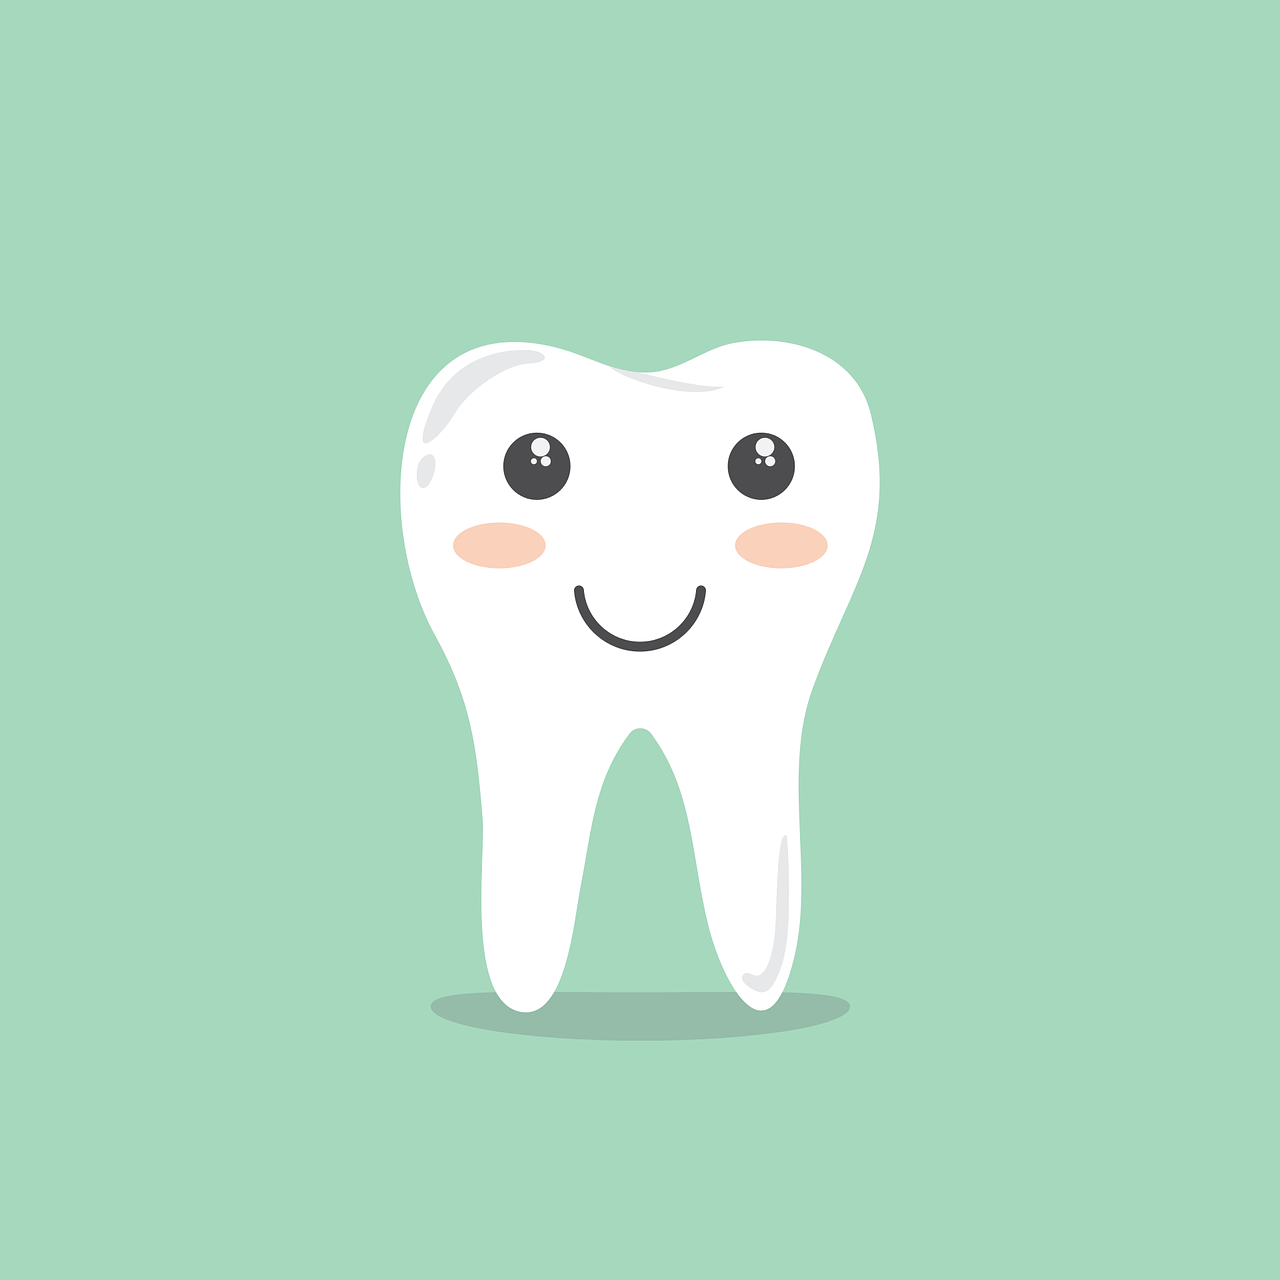 For the february bulletin board ideas you can explain teeth hygiene in a fun and creative way